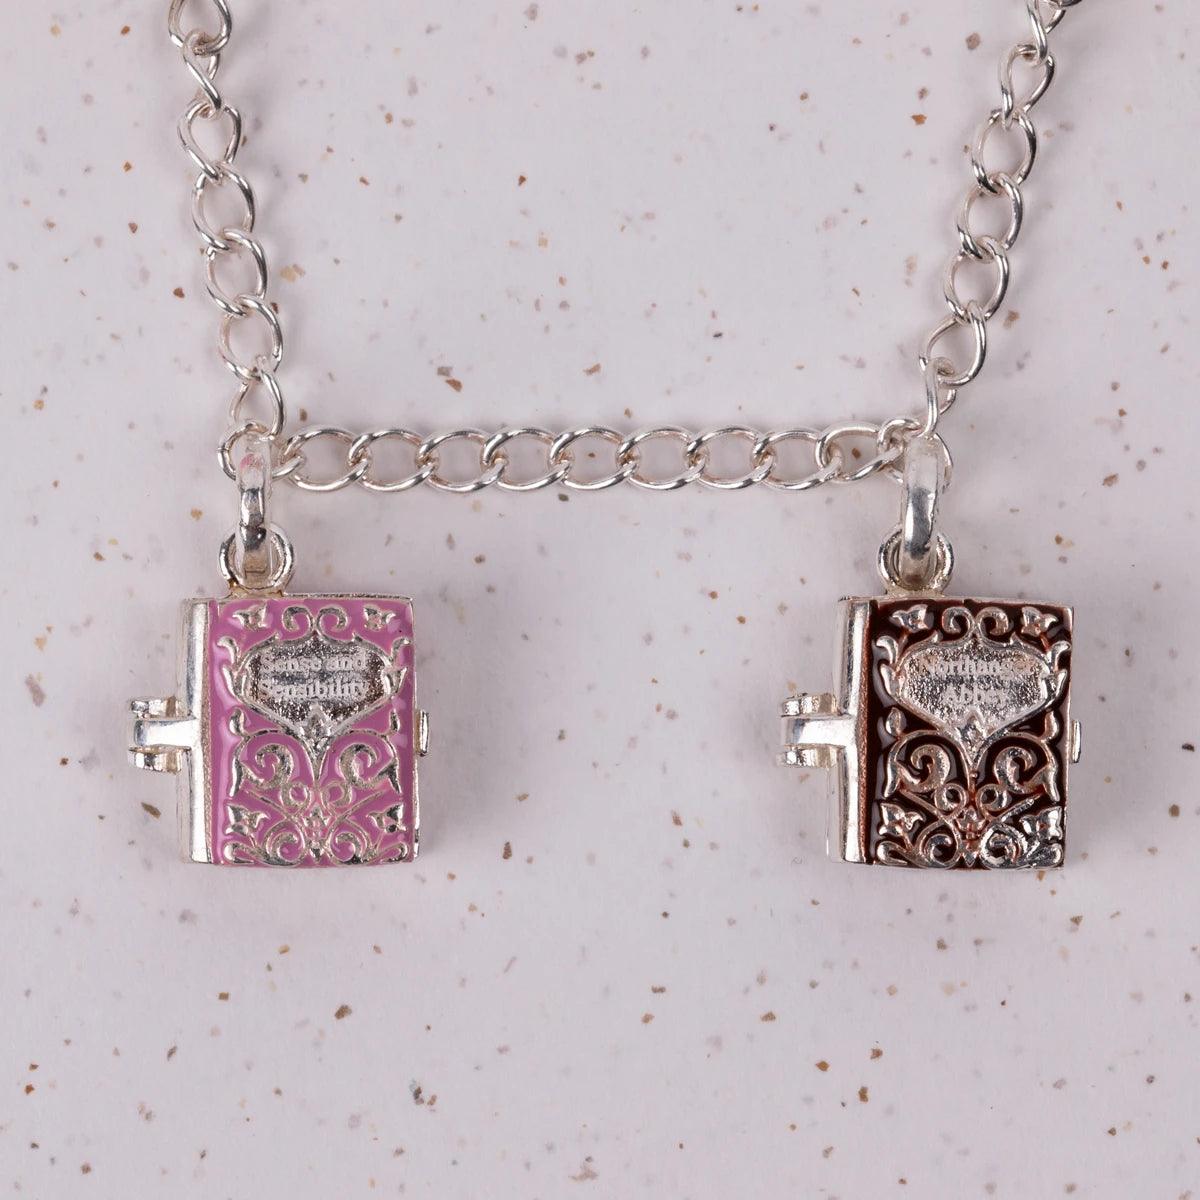 Jane Austen Six Sterling Silver and Enamel Novels Charm Bracelet | Exclusive Collection